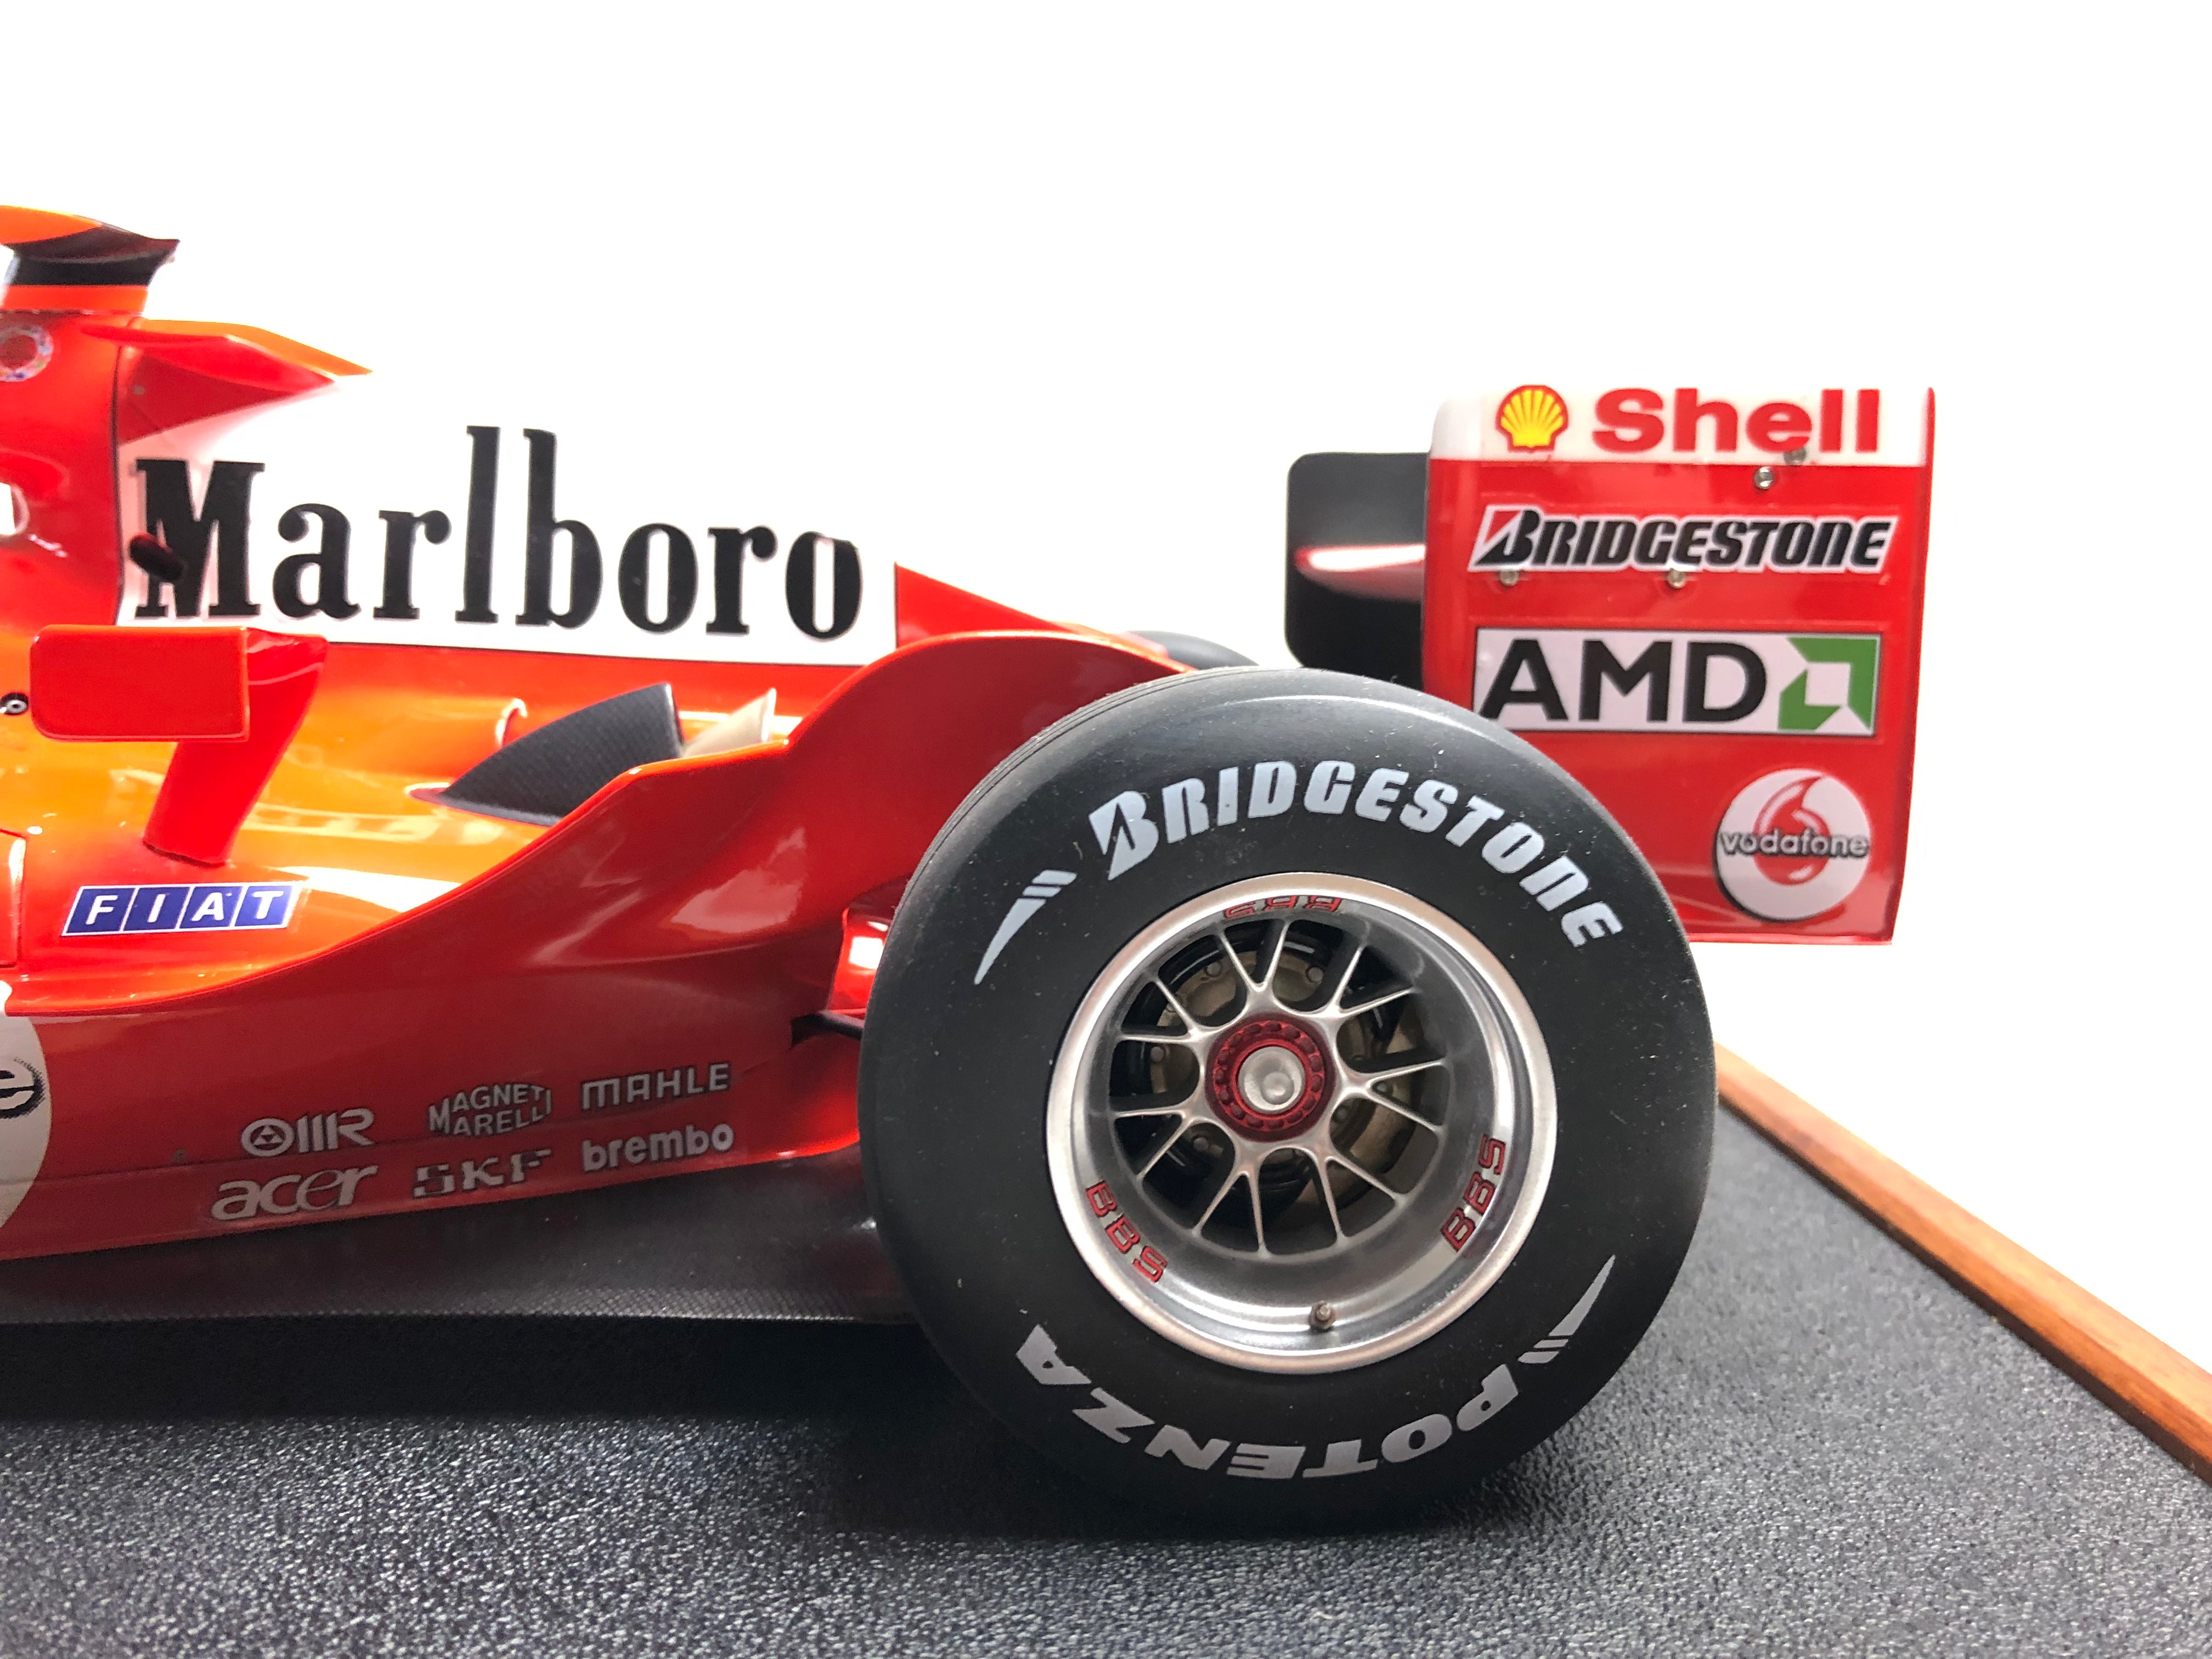 Amalgam 1:8 scale Ferrari F2004 Michael Schumacher #1 200th Win